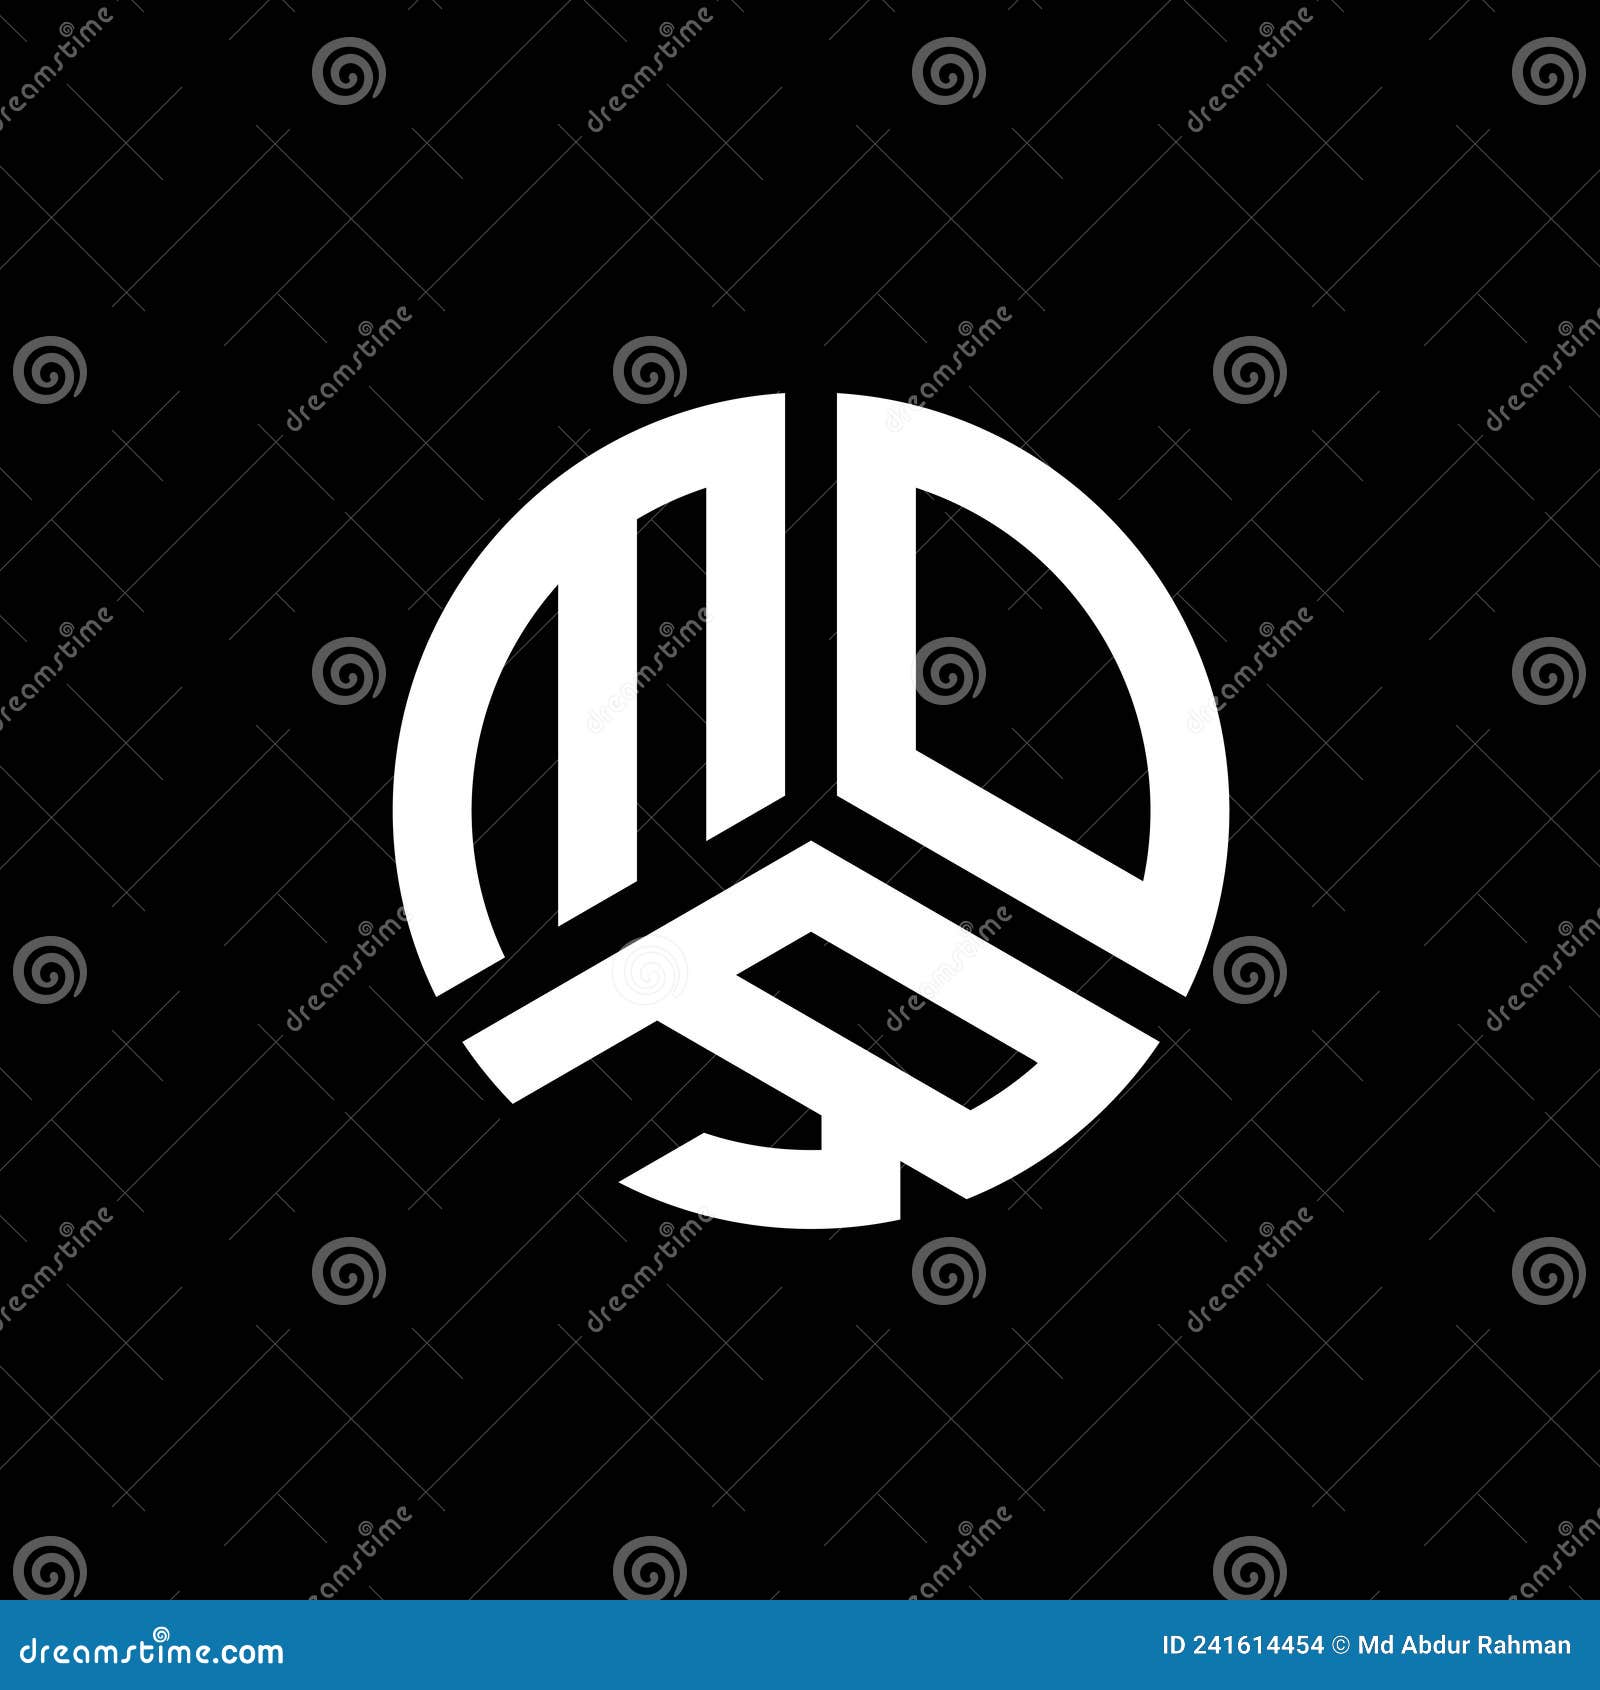 MOR Letter Logo Design on Black Background. MOR Creative Initials ...